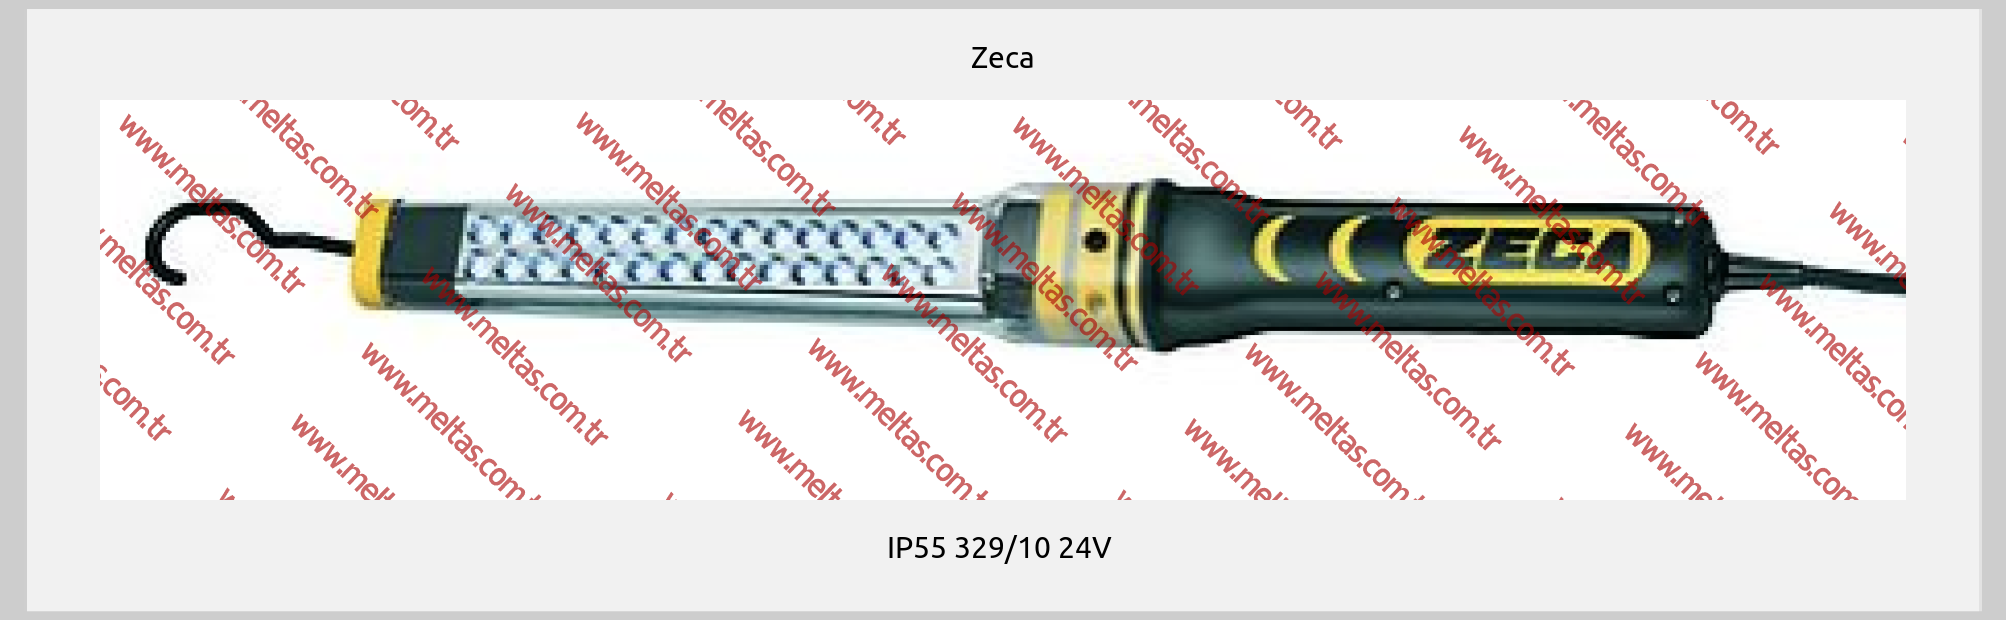 Zeca - IP55 329/10 24V 